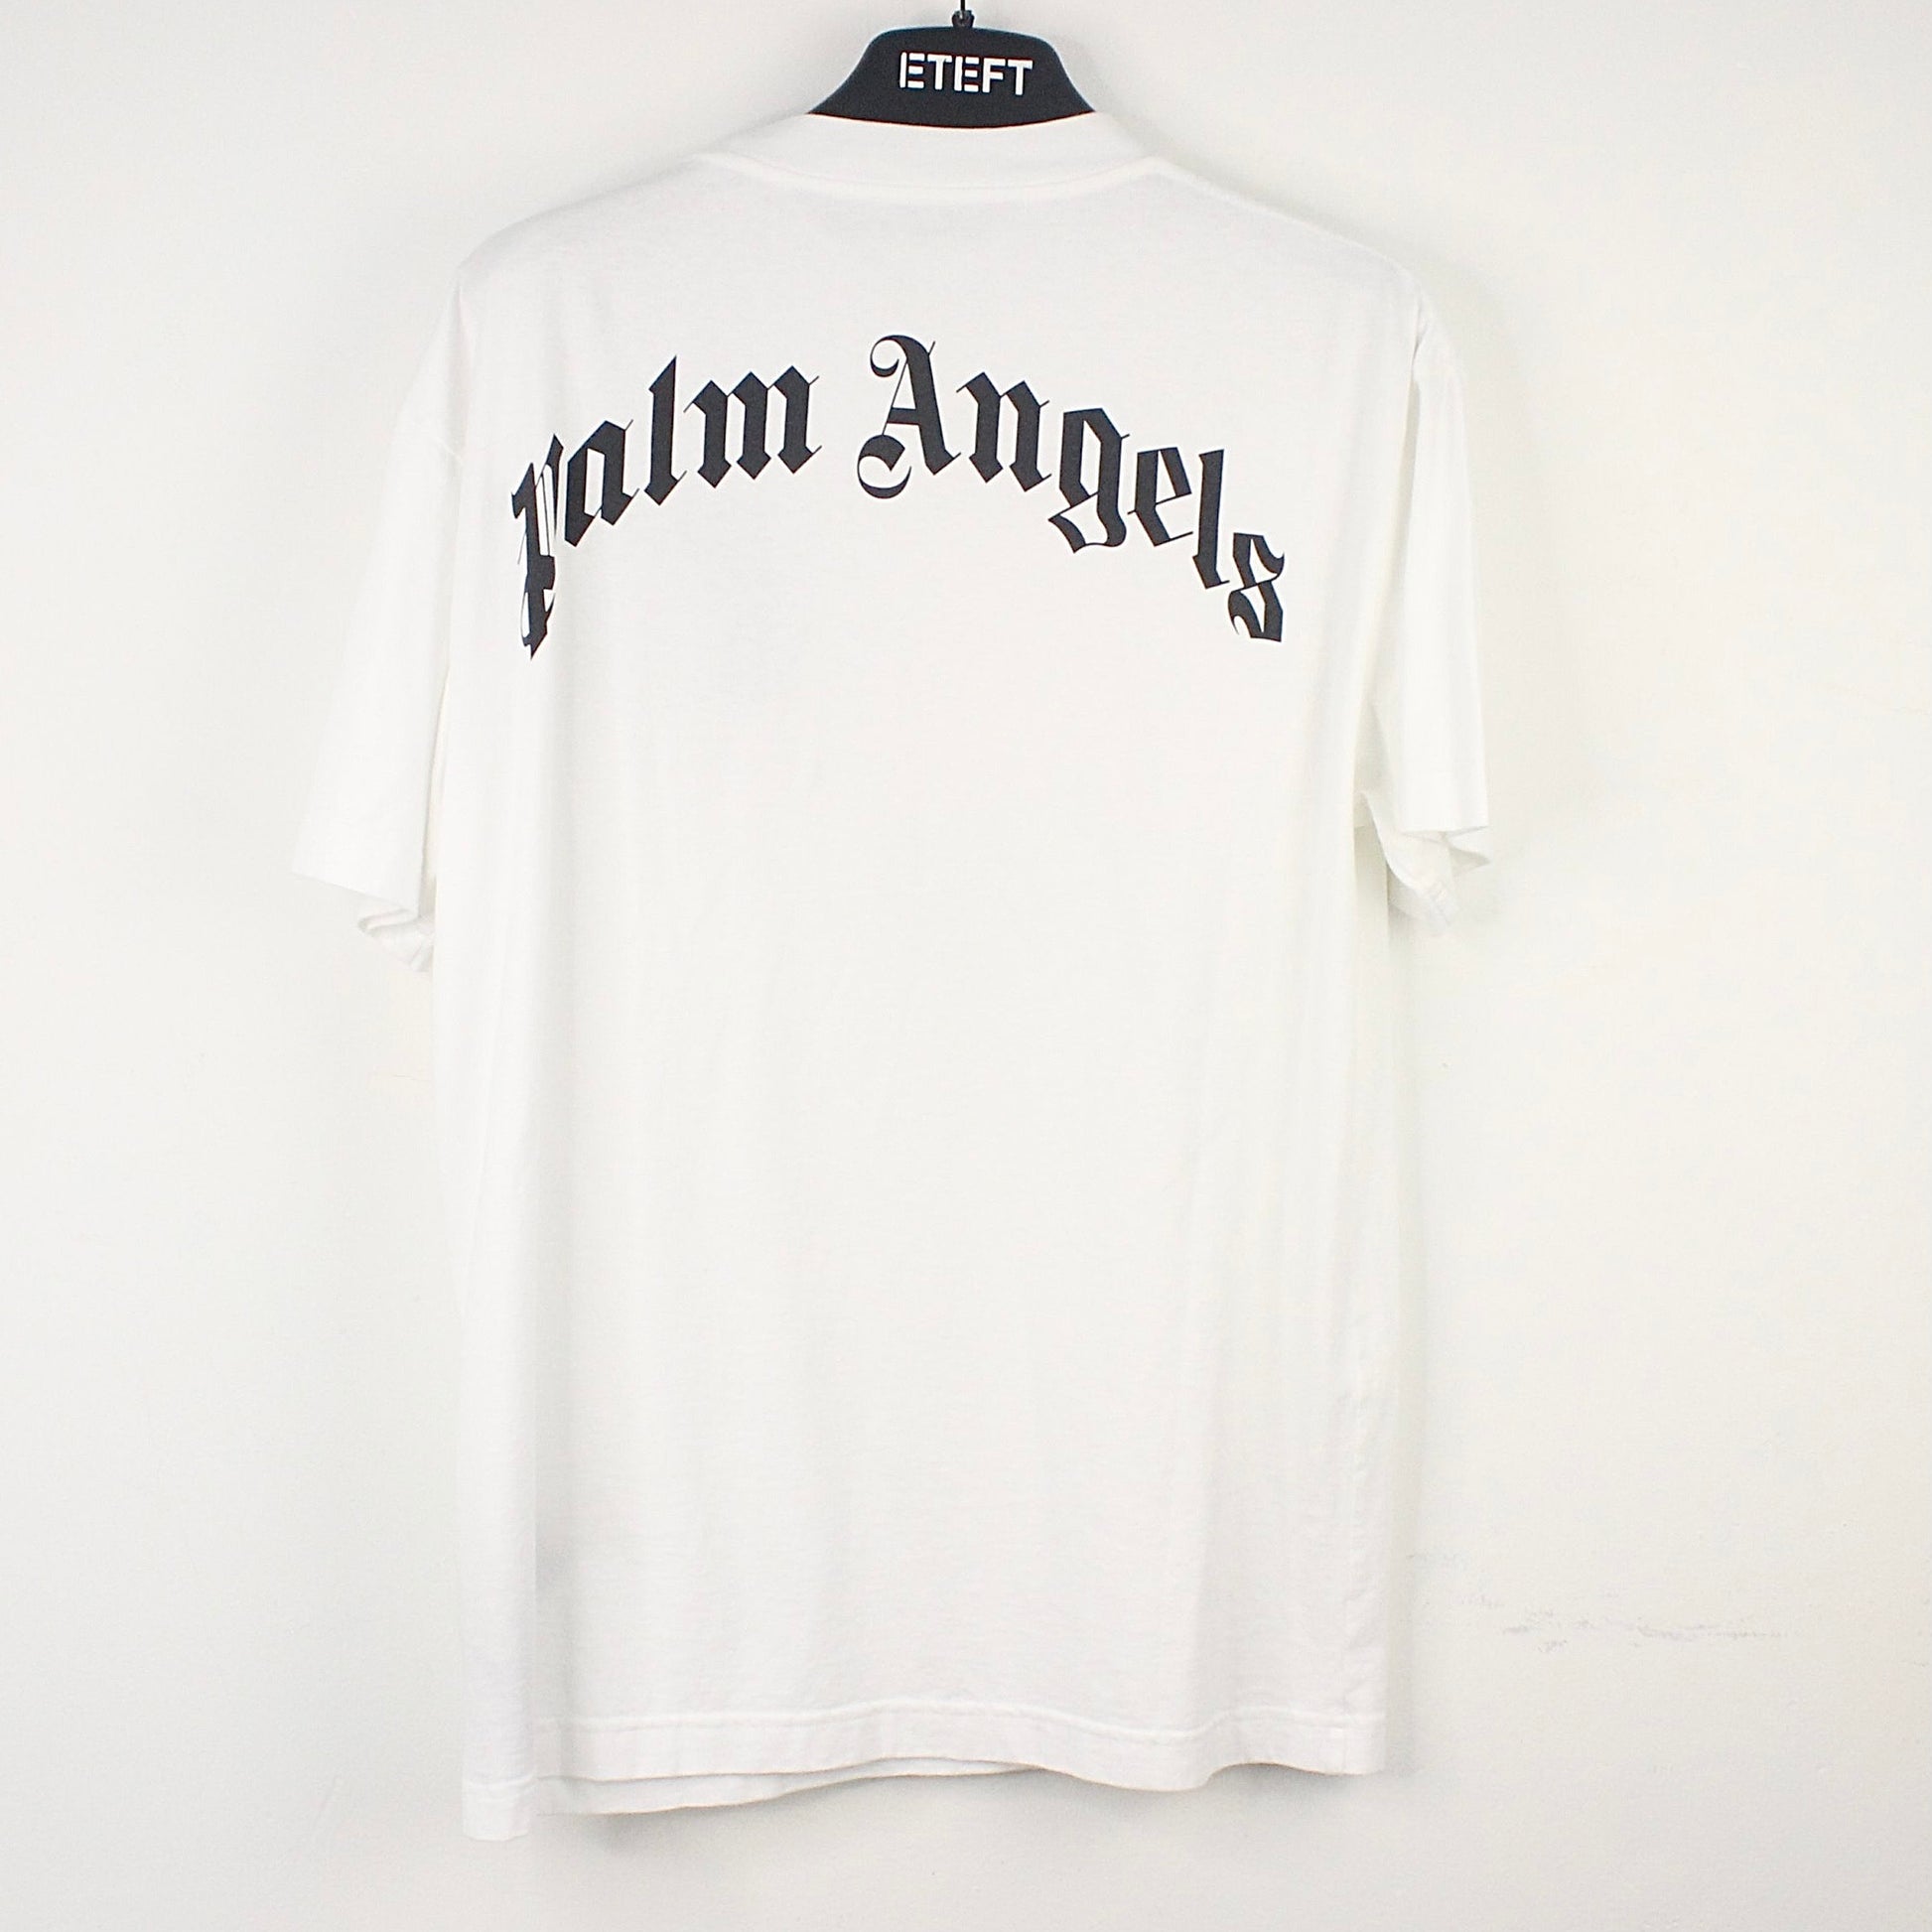 PALM ANGELS T-SHIRT (SLIM) – ETEFT AUTHENTIC